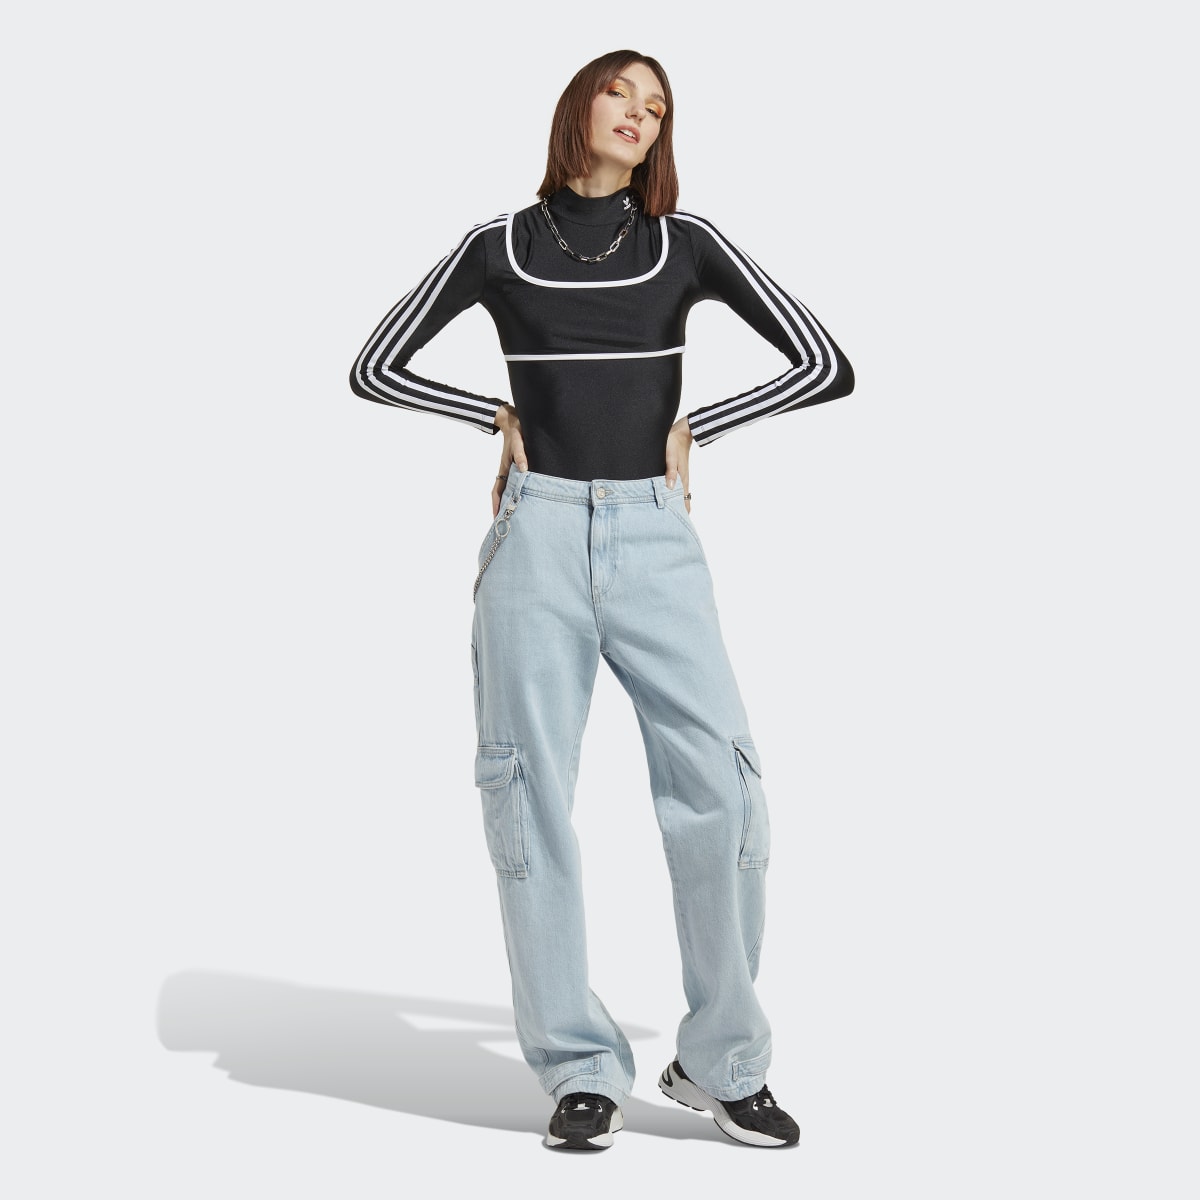 Adidas Long Sleeve Bodysuit. 4